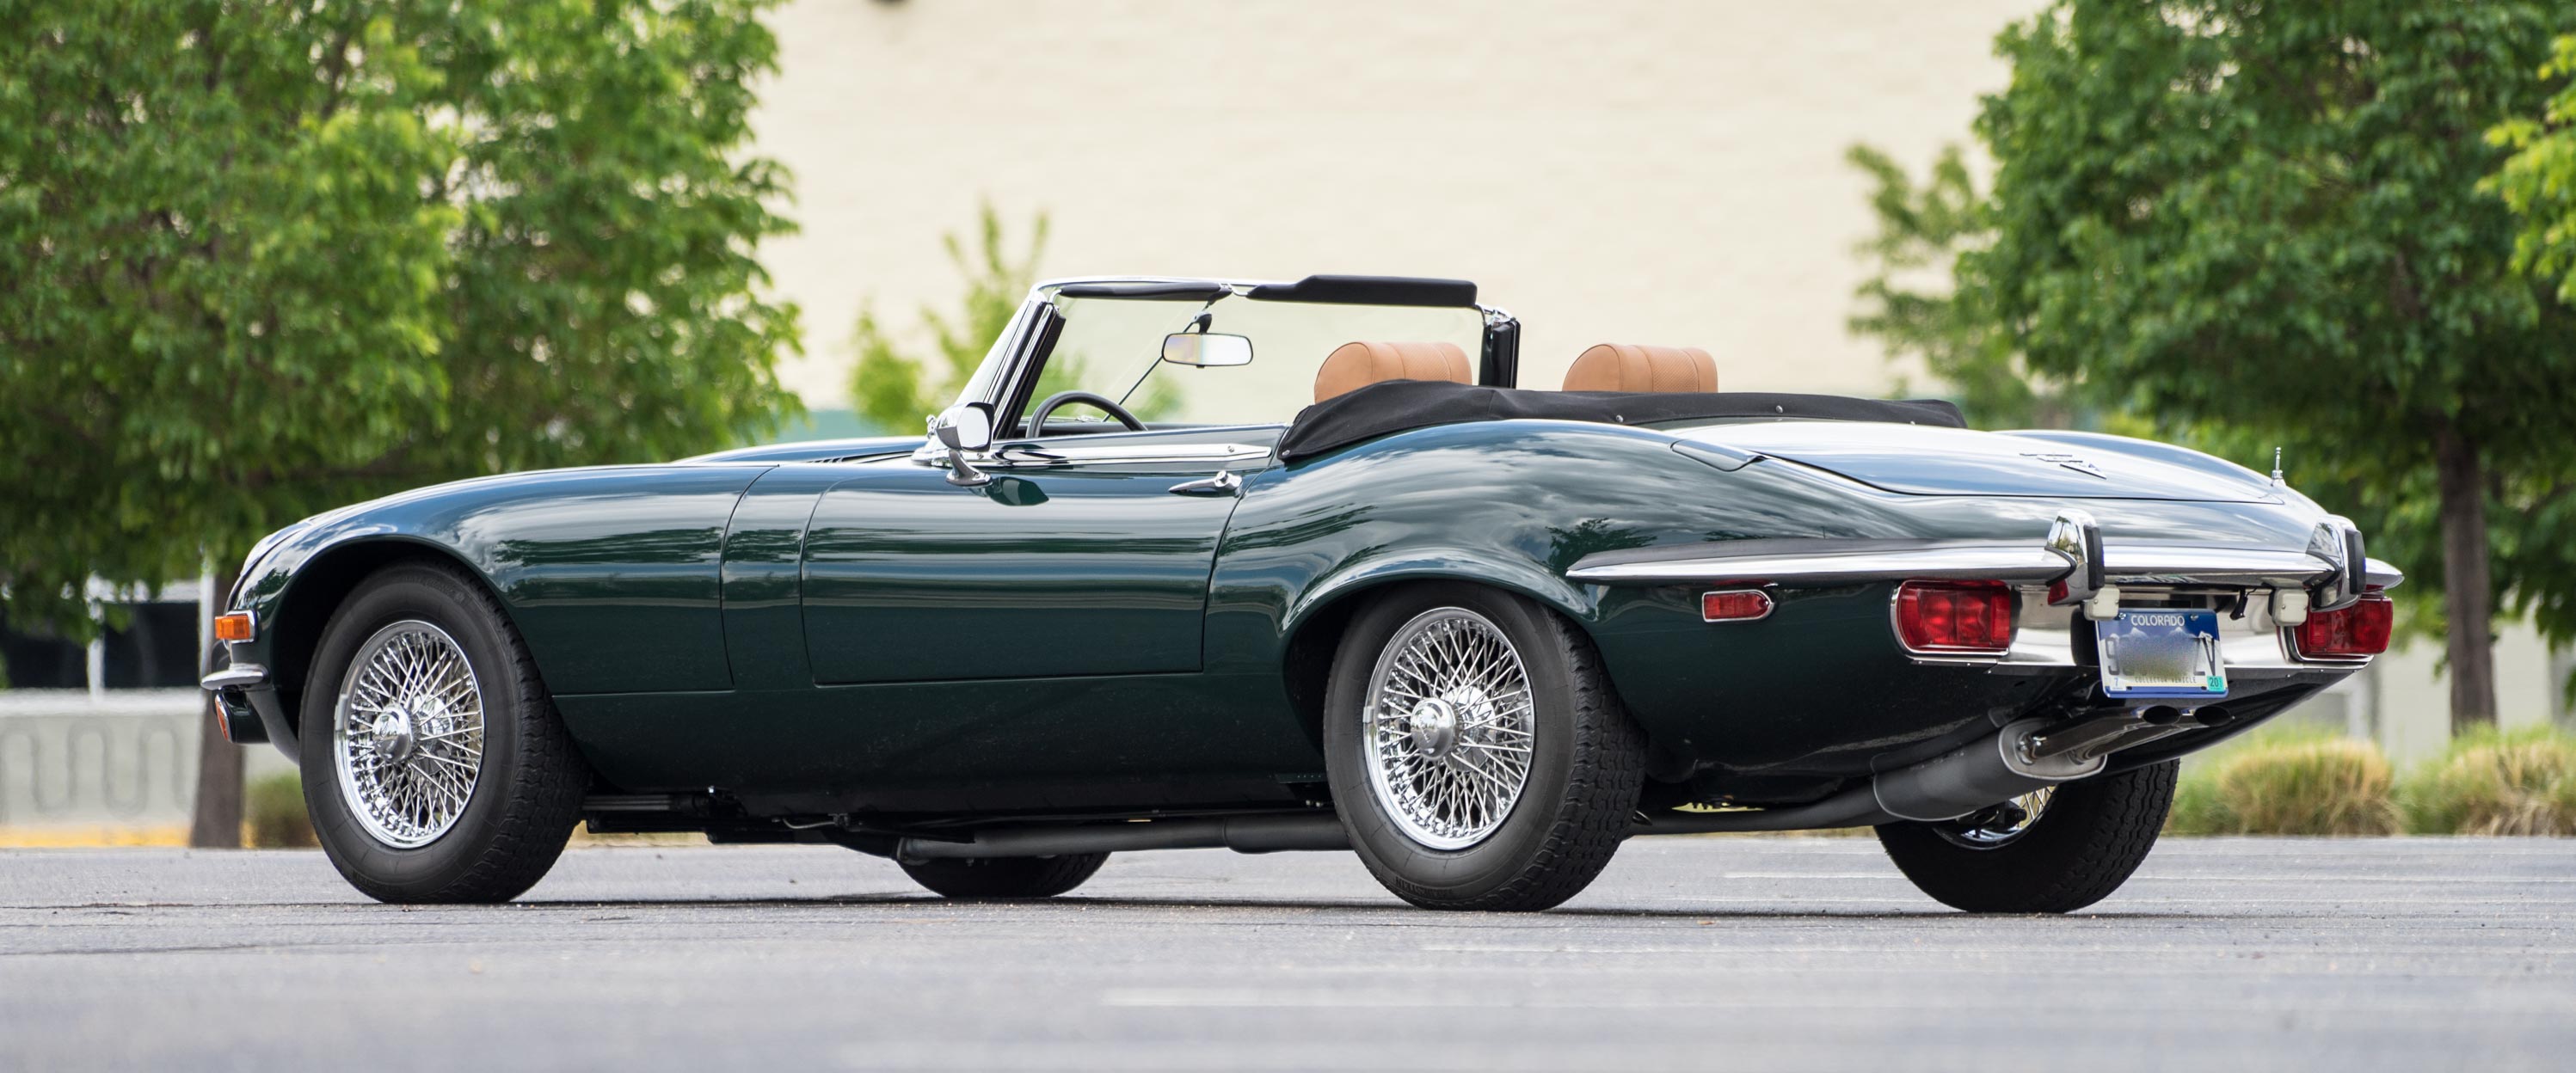 1973-Jaguar-E-type-Green-slideshow-001@2x.jpg